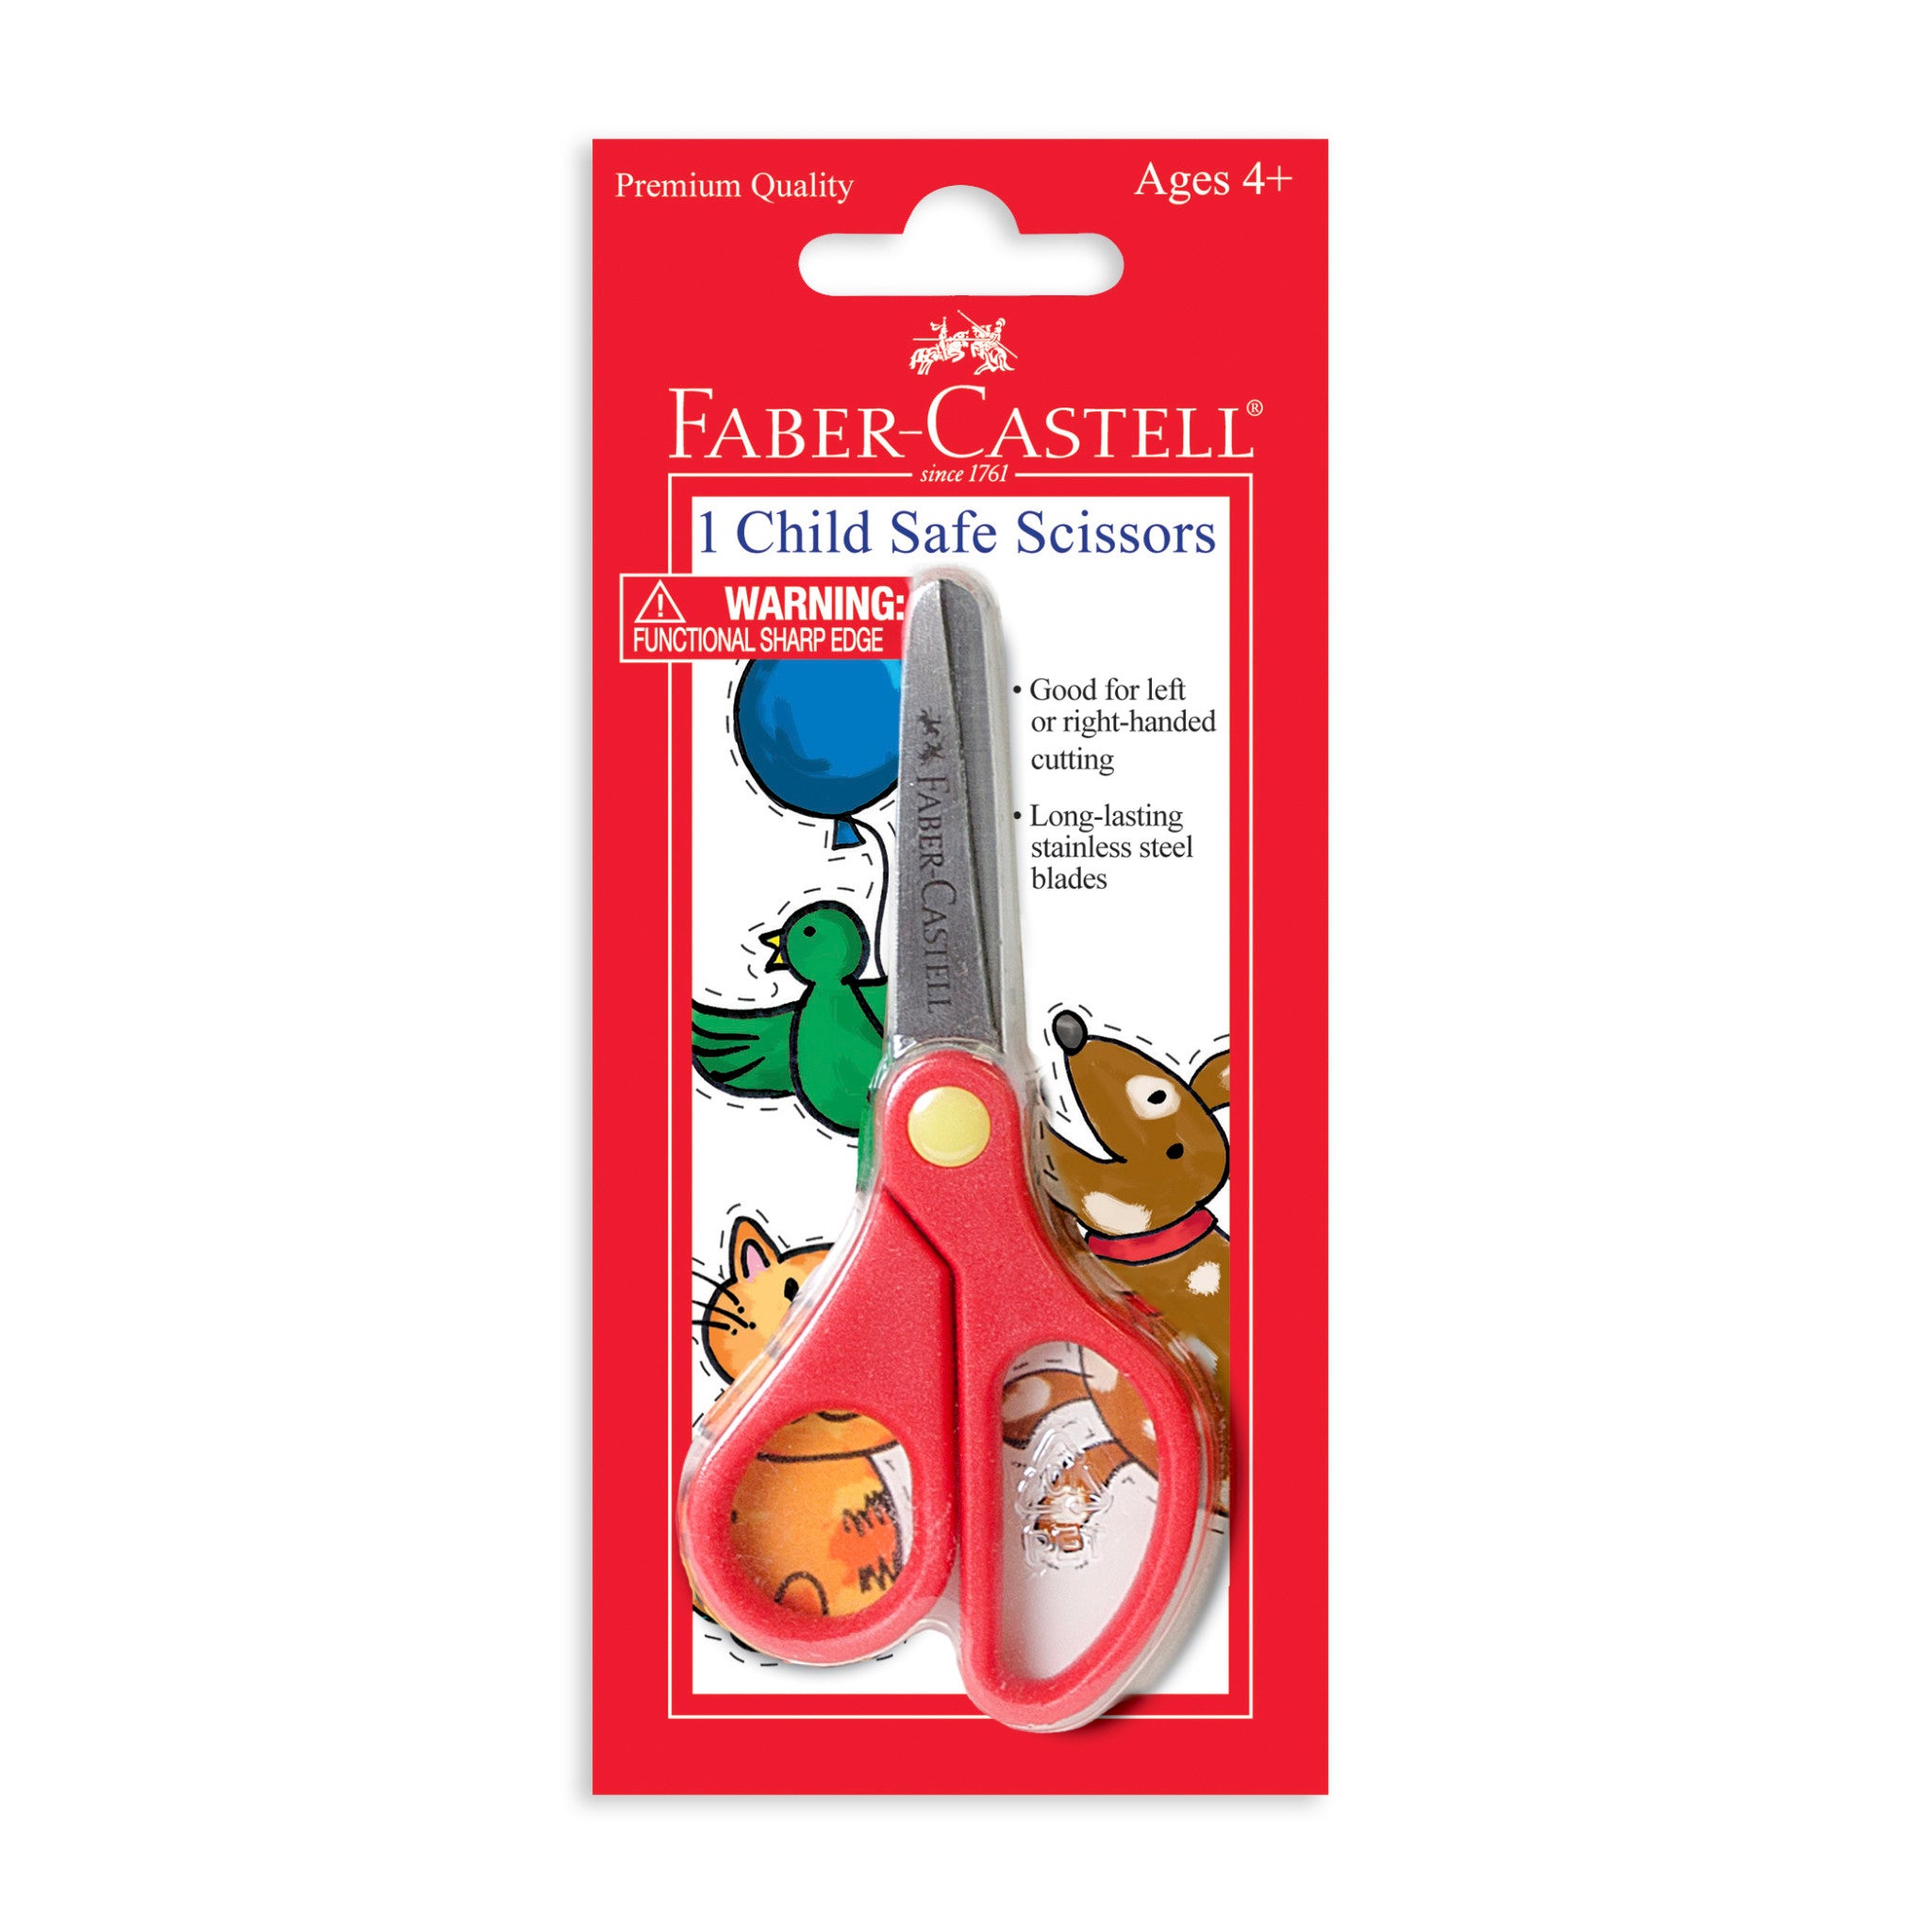 Faber Castell Spring Kids Scissors 3+ (181571)